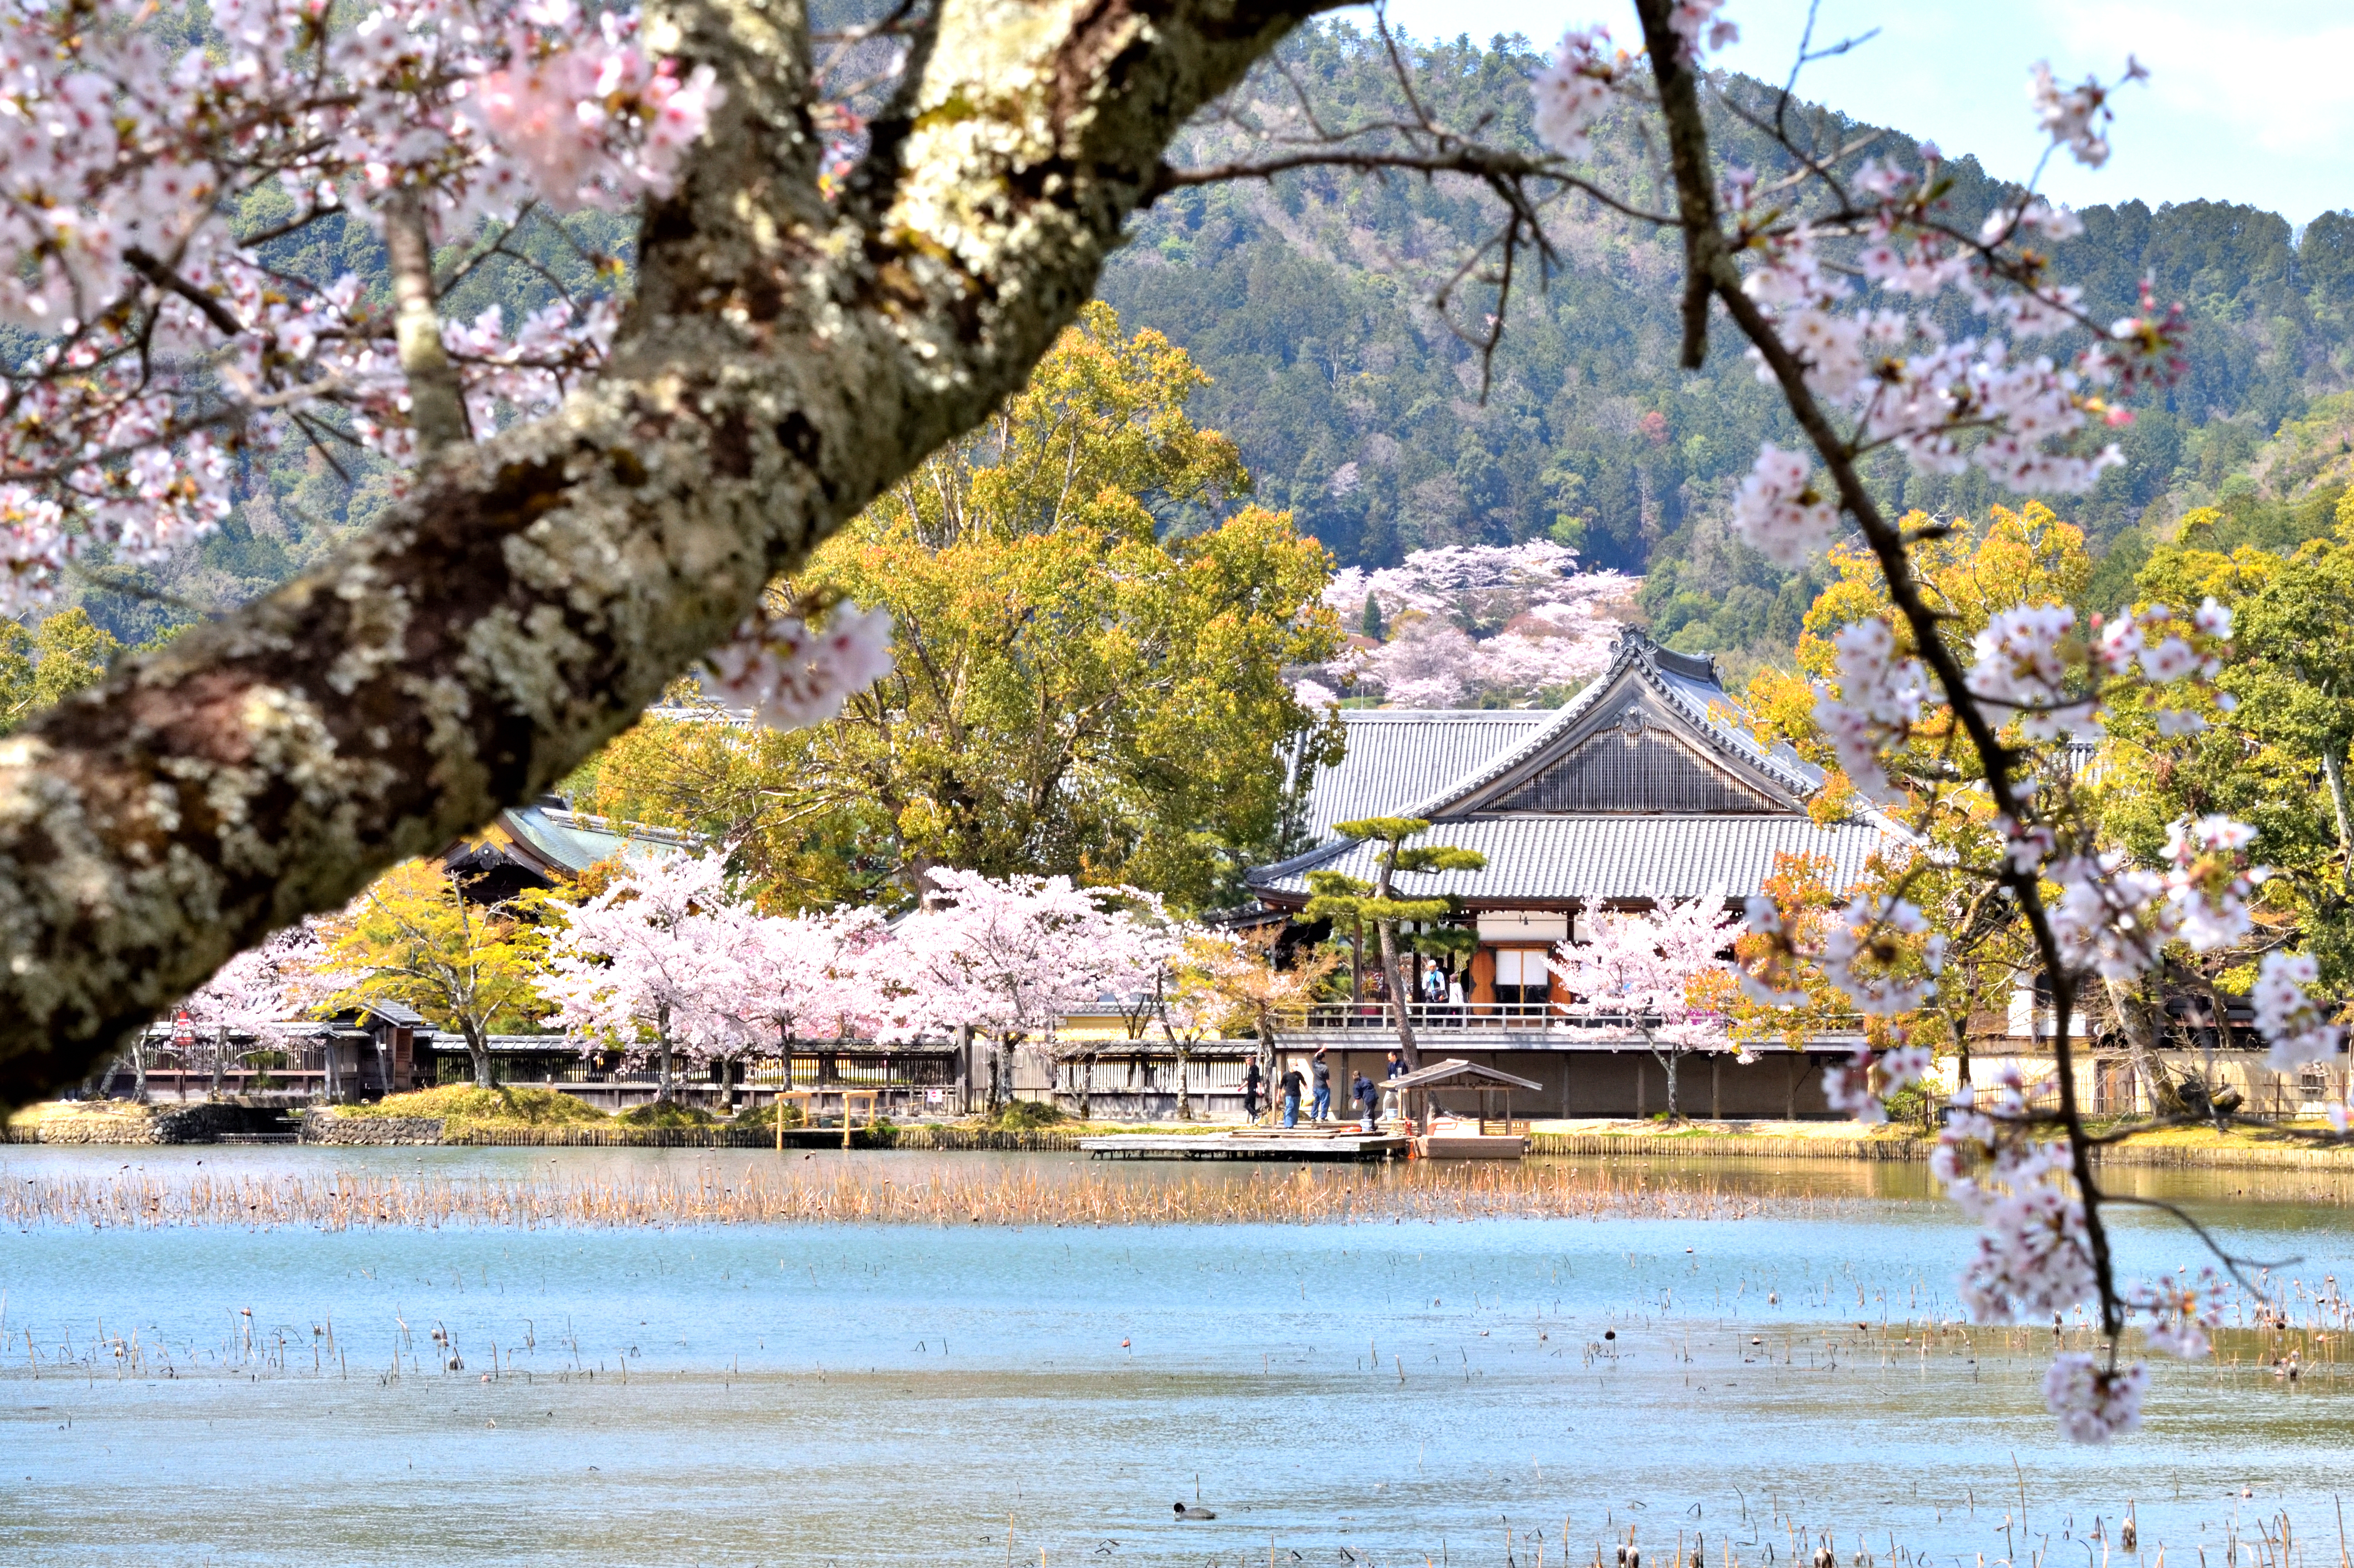 Daikakuji temple and Osawaike pond